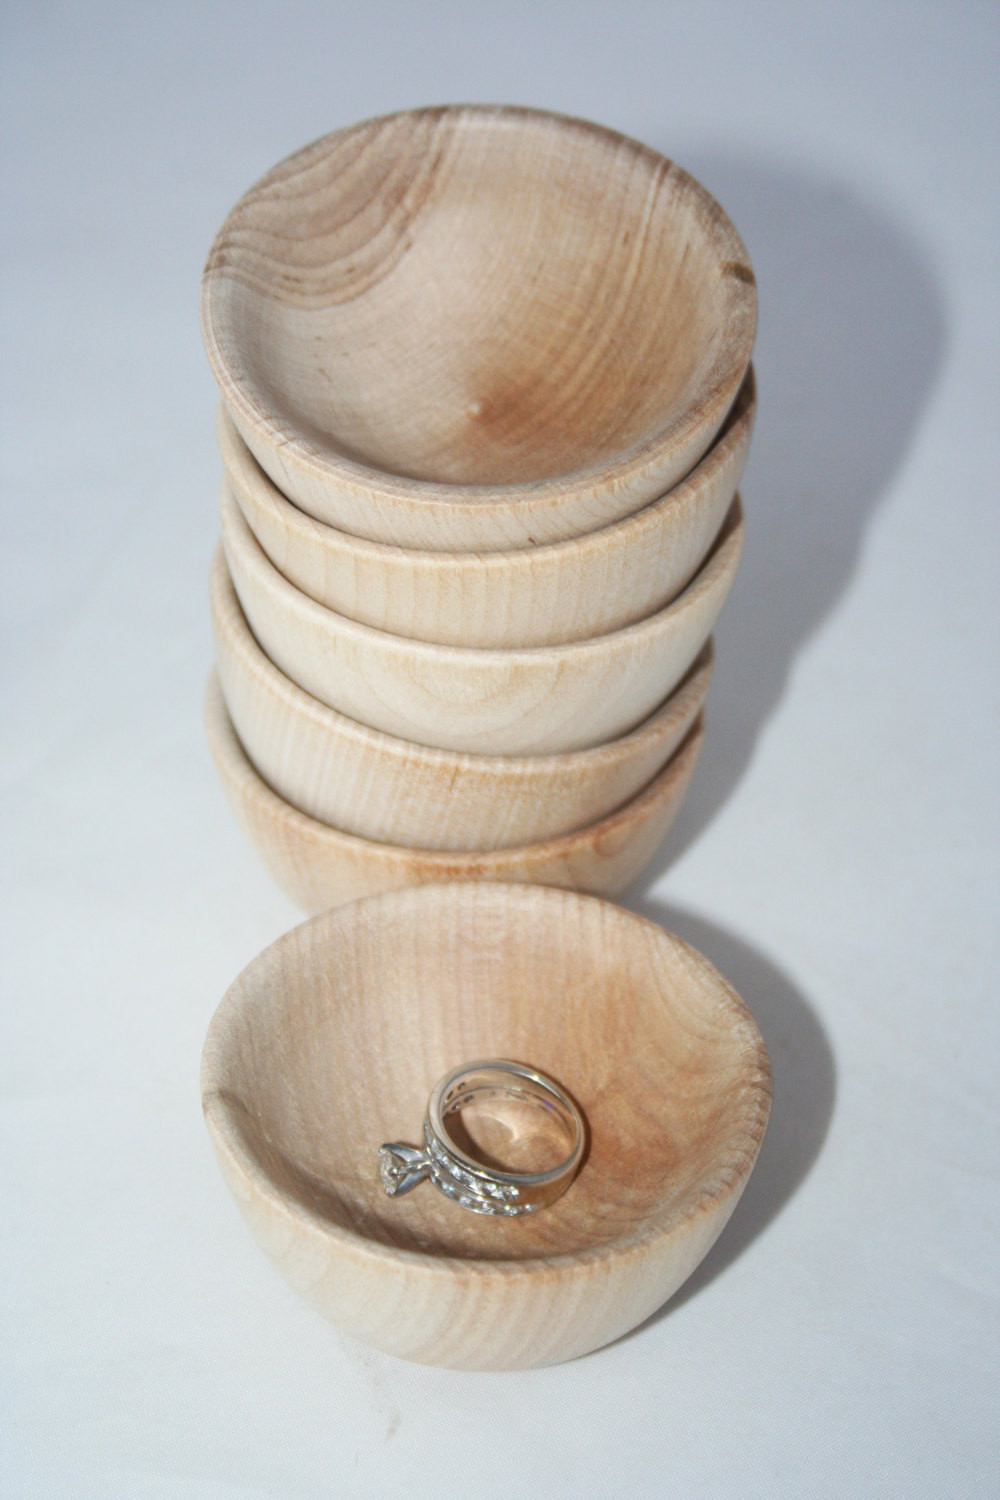 DIY Wood Bowl
 1 2 5" DIY Wooden Bowl Small Bowl Jewlery Bowl Toy